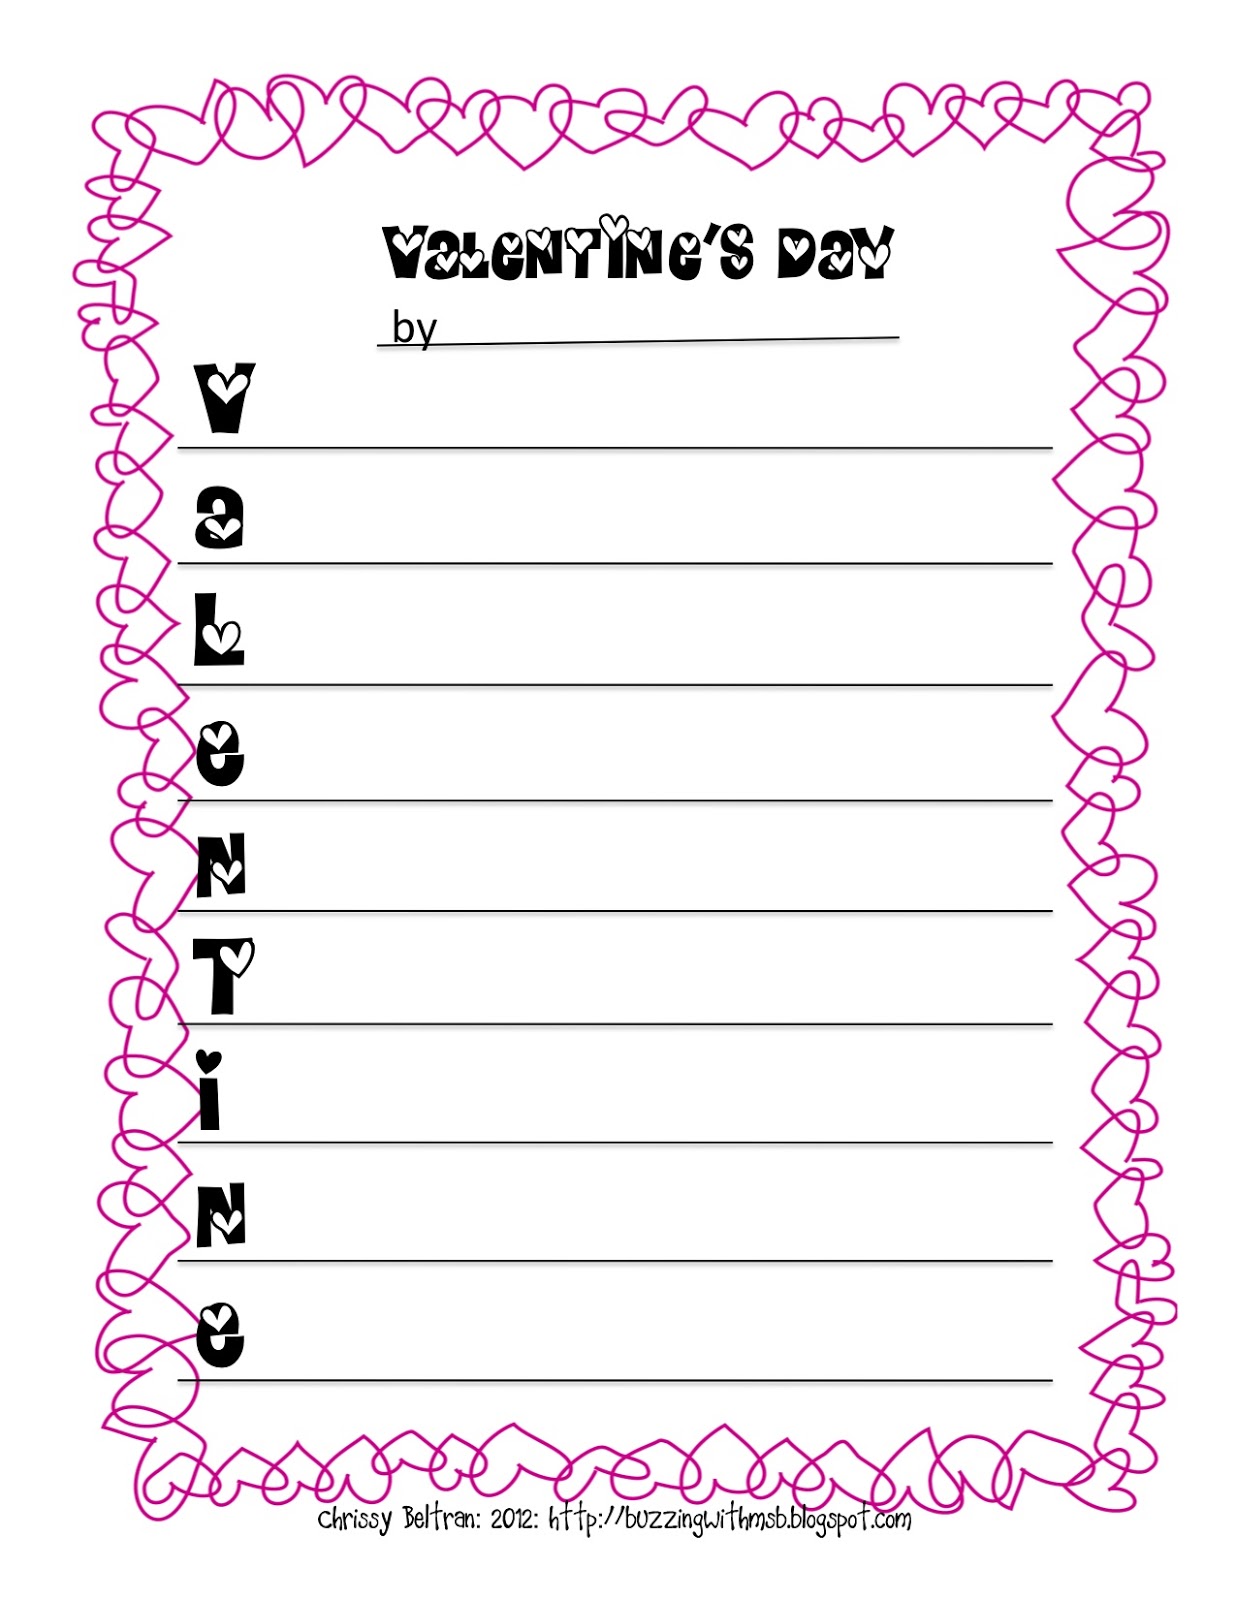 3-6-free-resources-valentine-s-day-acrostic-poem